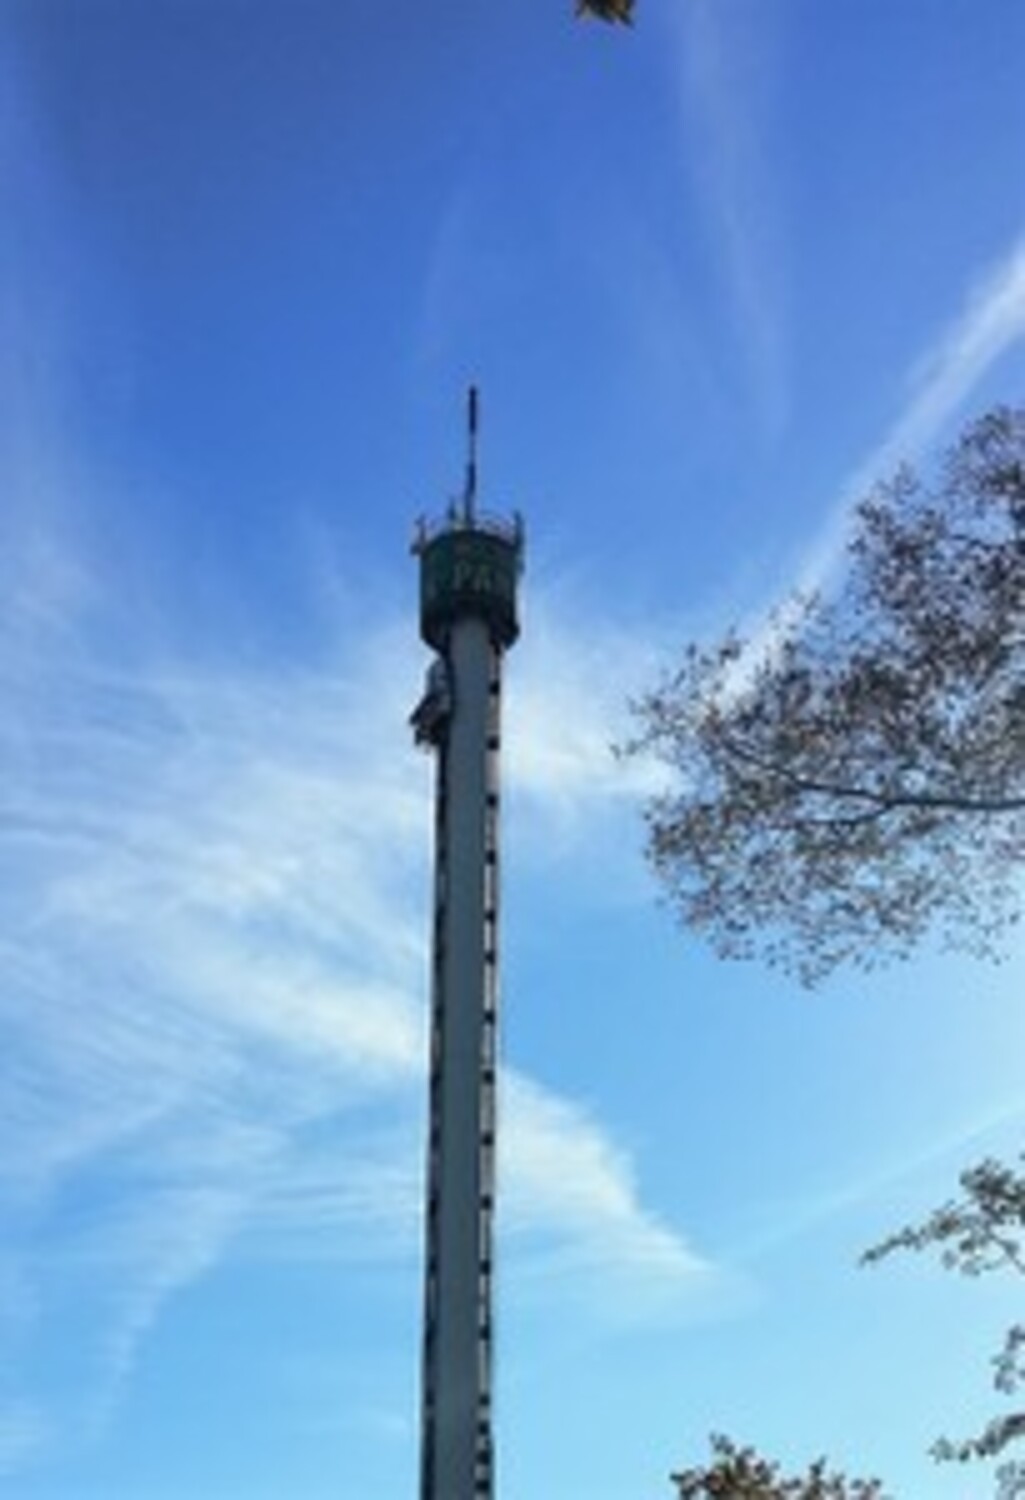 Free Fall Tower